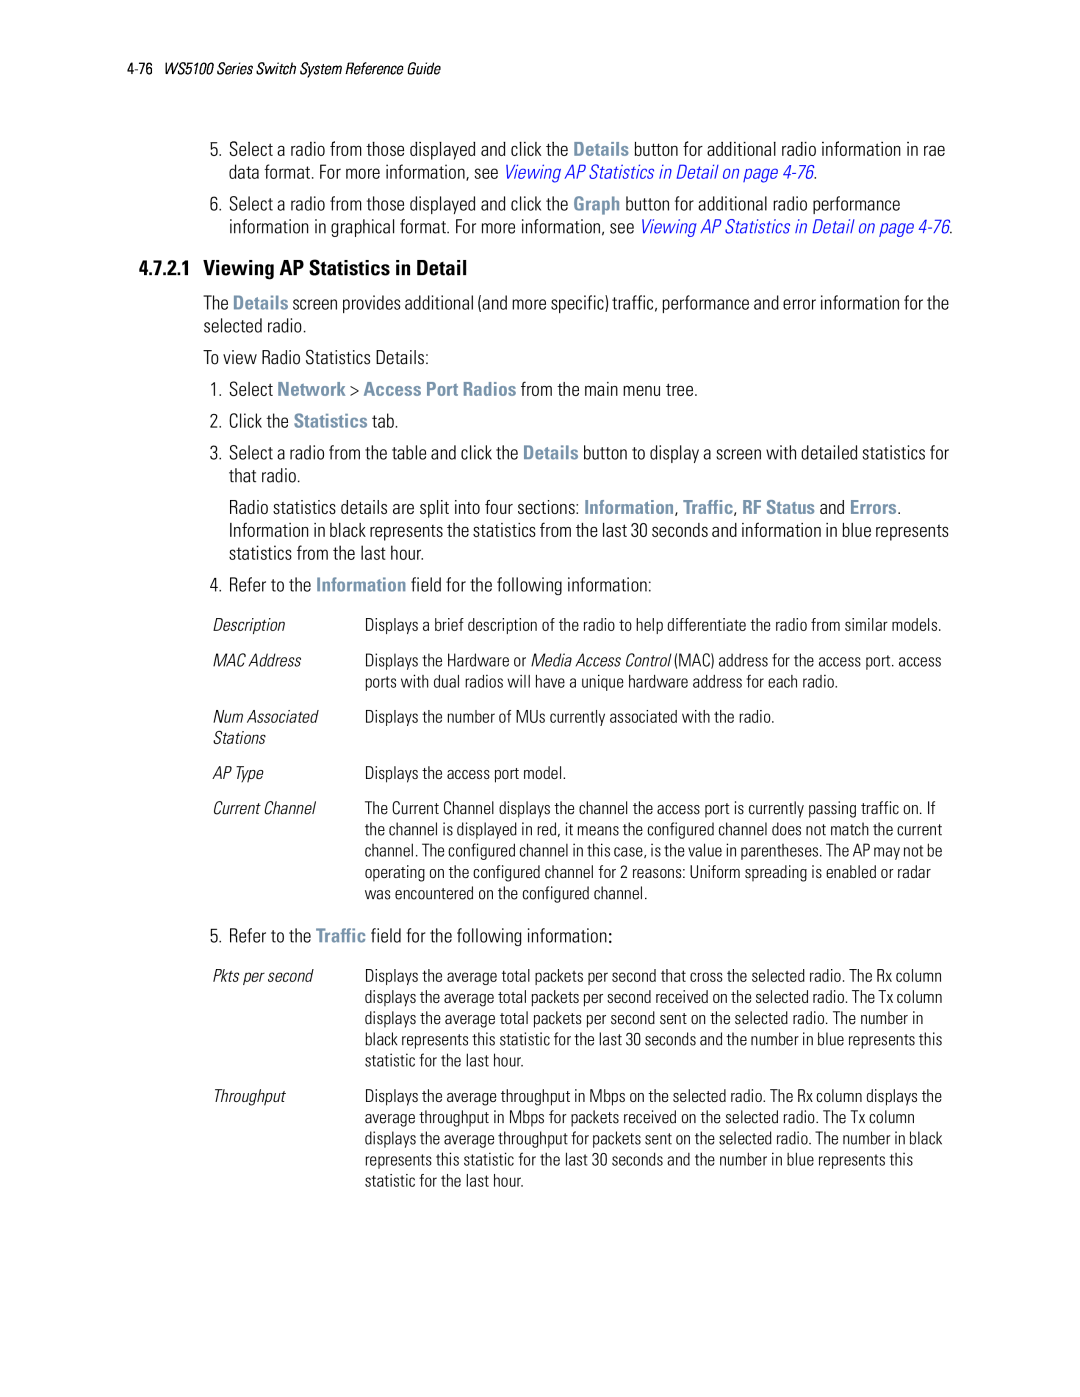 Motorola WS5100 manual 4.7.2.1Viewing AP Statistics in Detail 